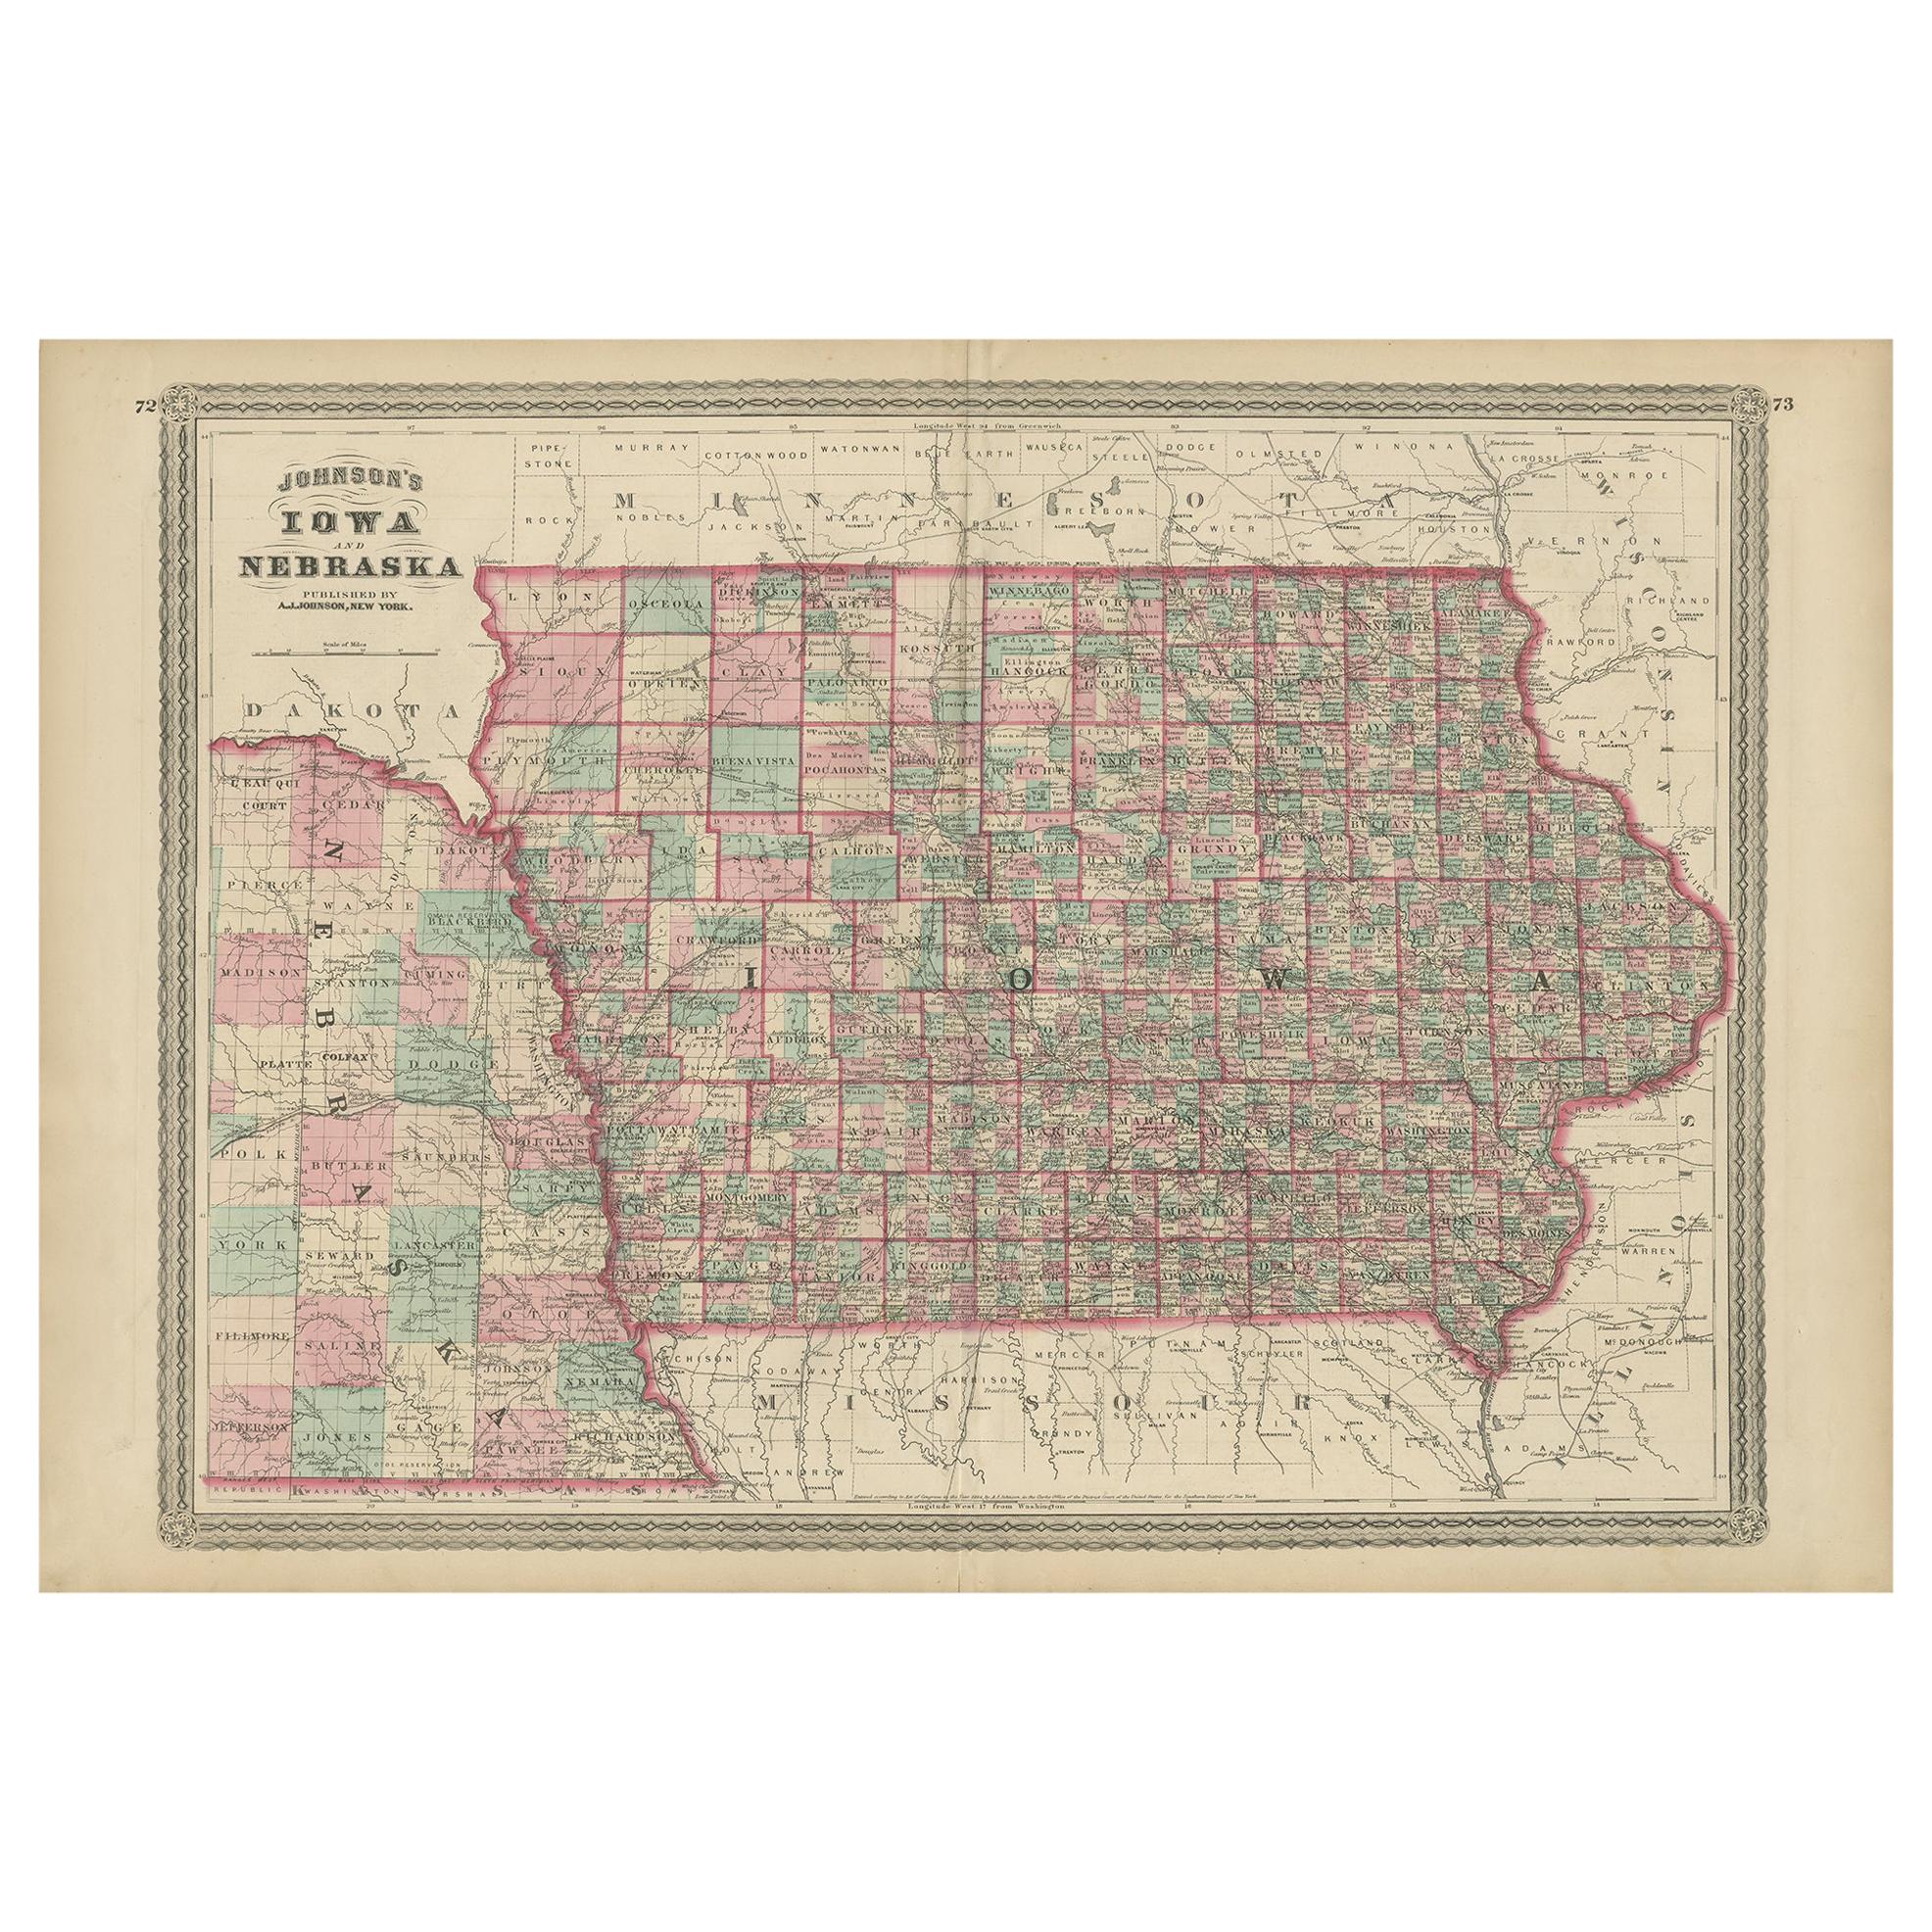 Antique Map of Iowa and Nebraska by Johnson, '1872'